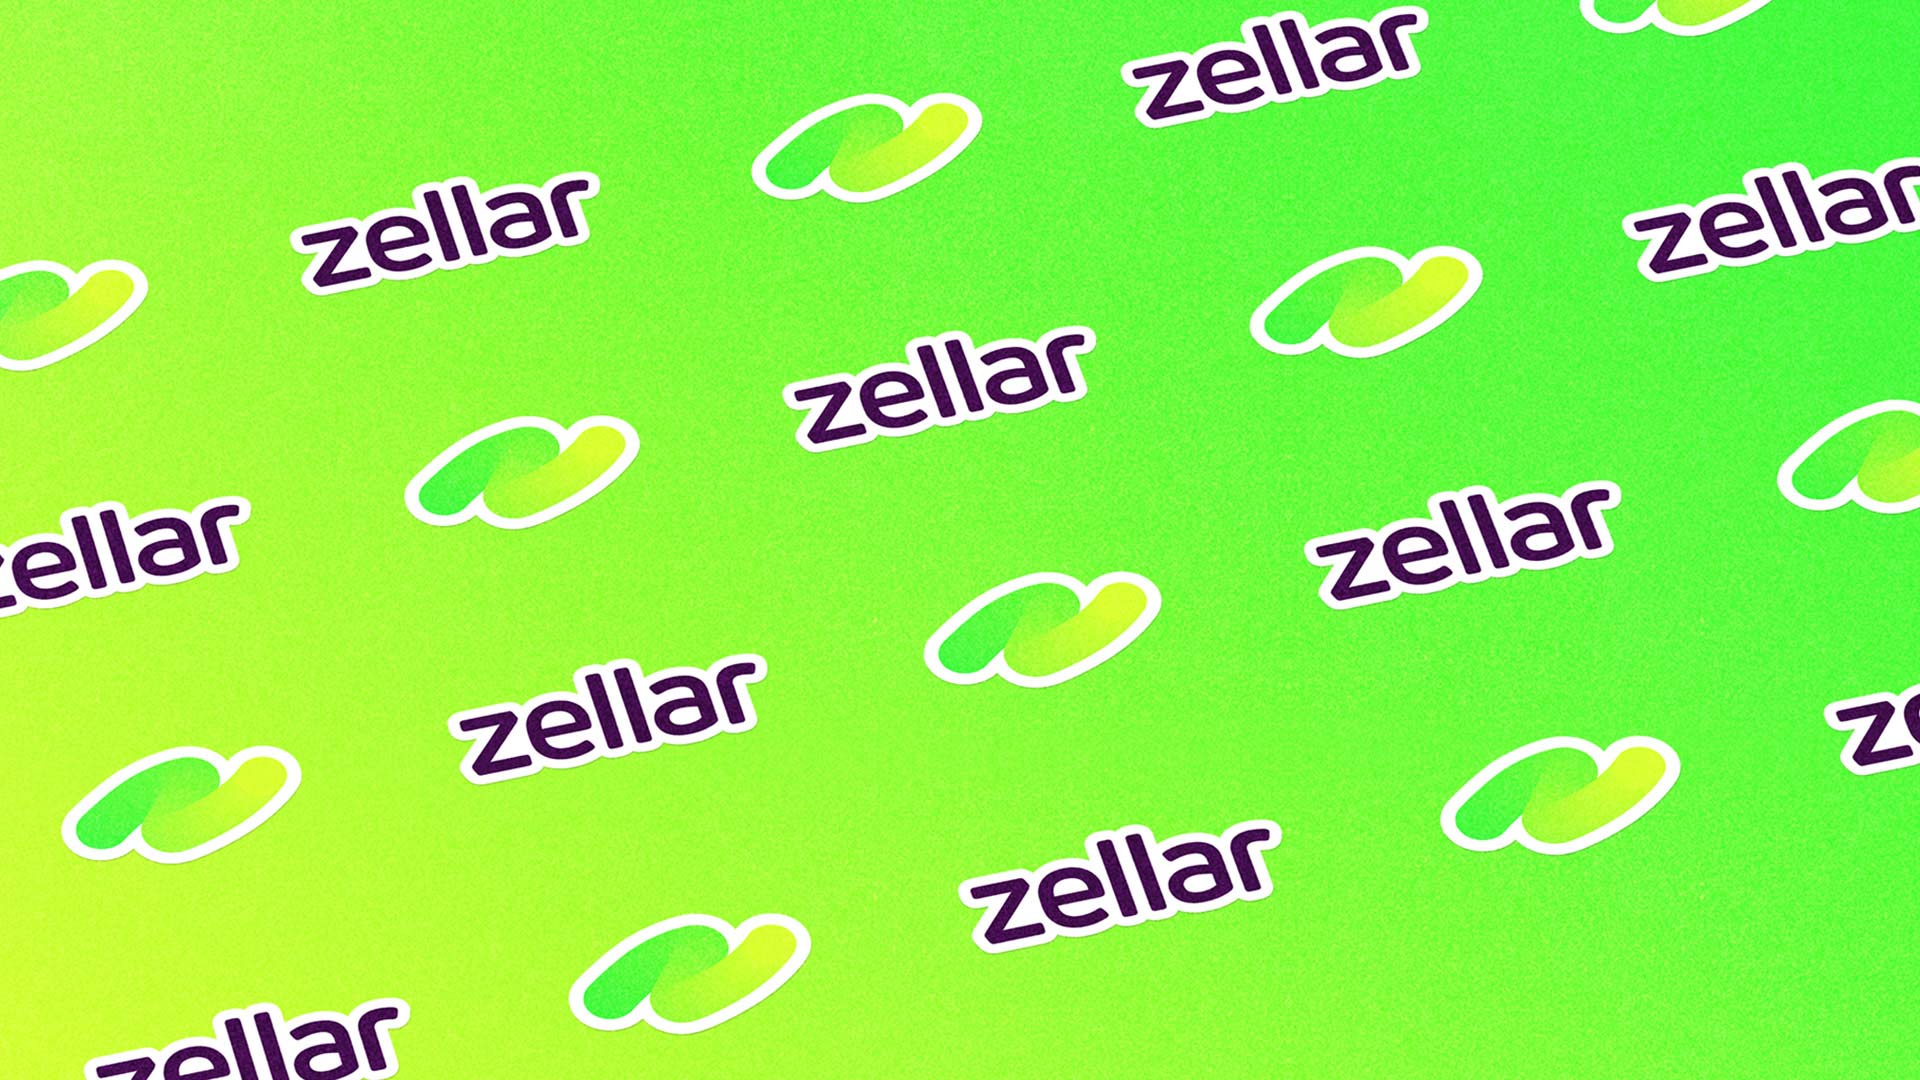 Zellar Logos